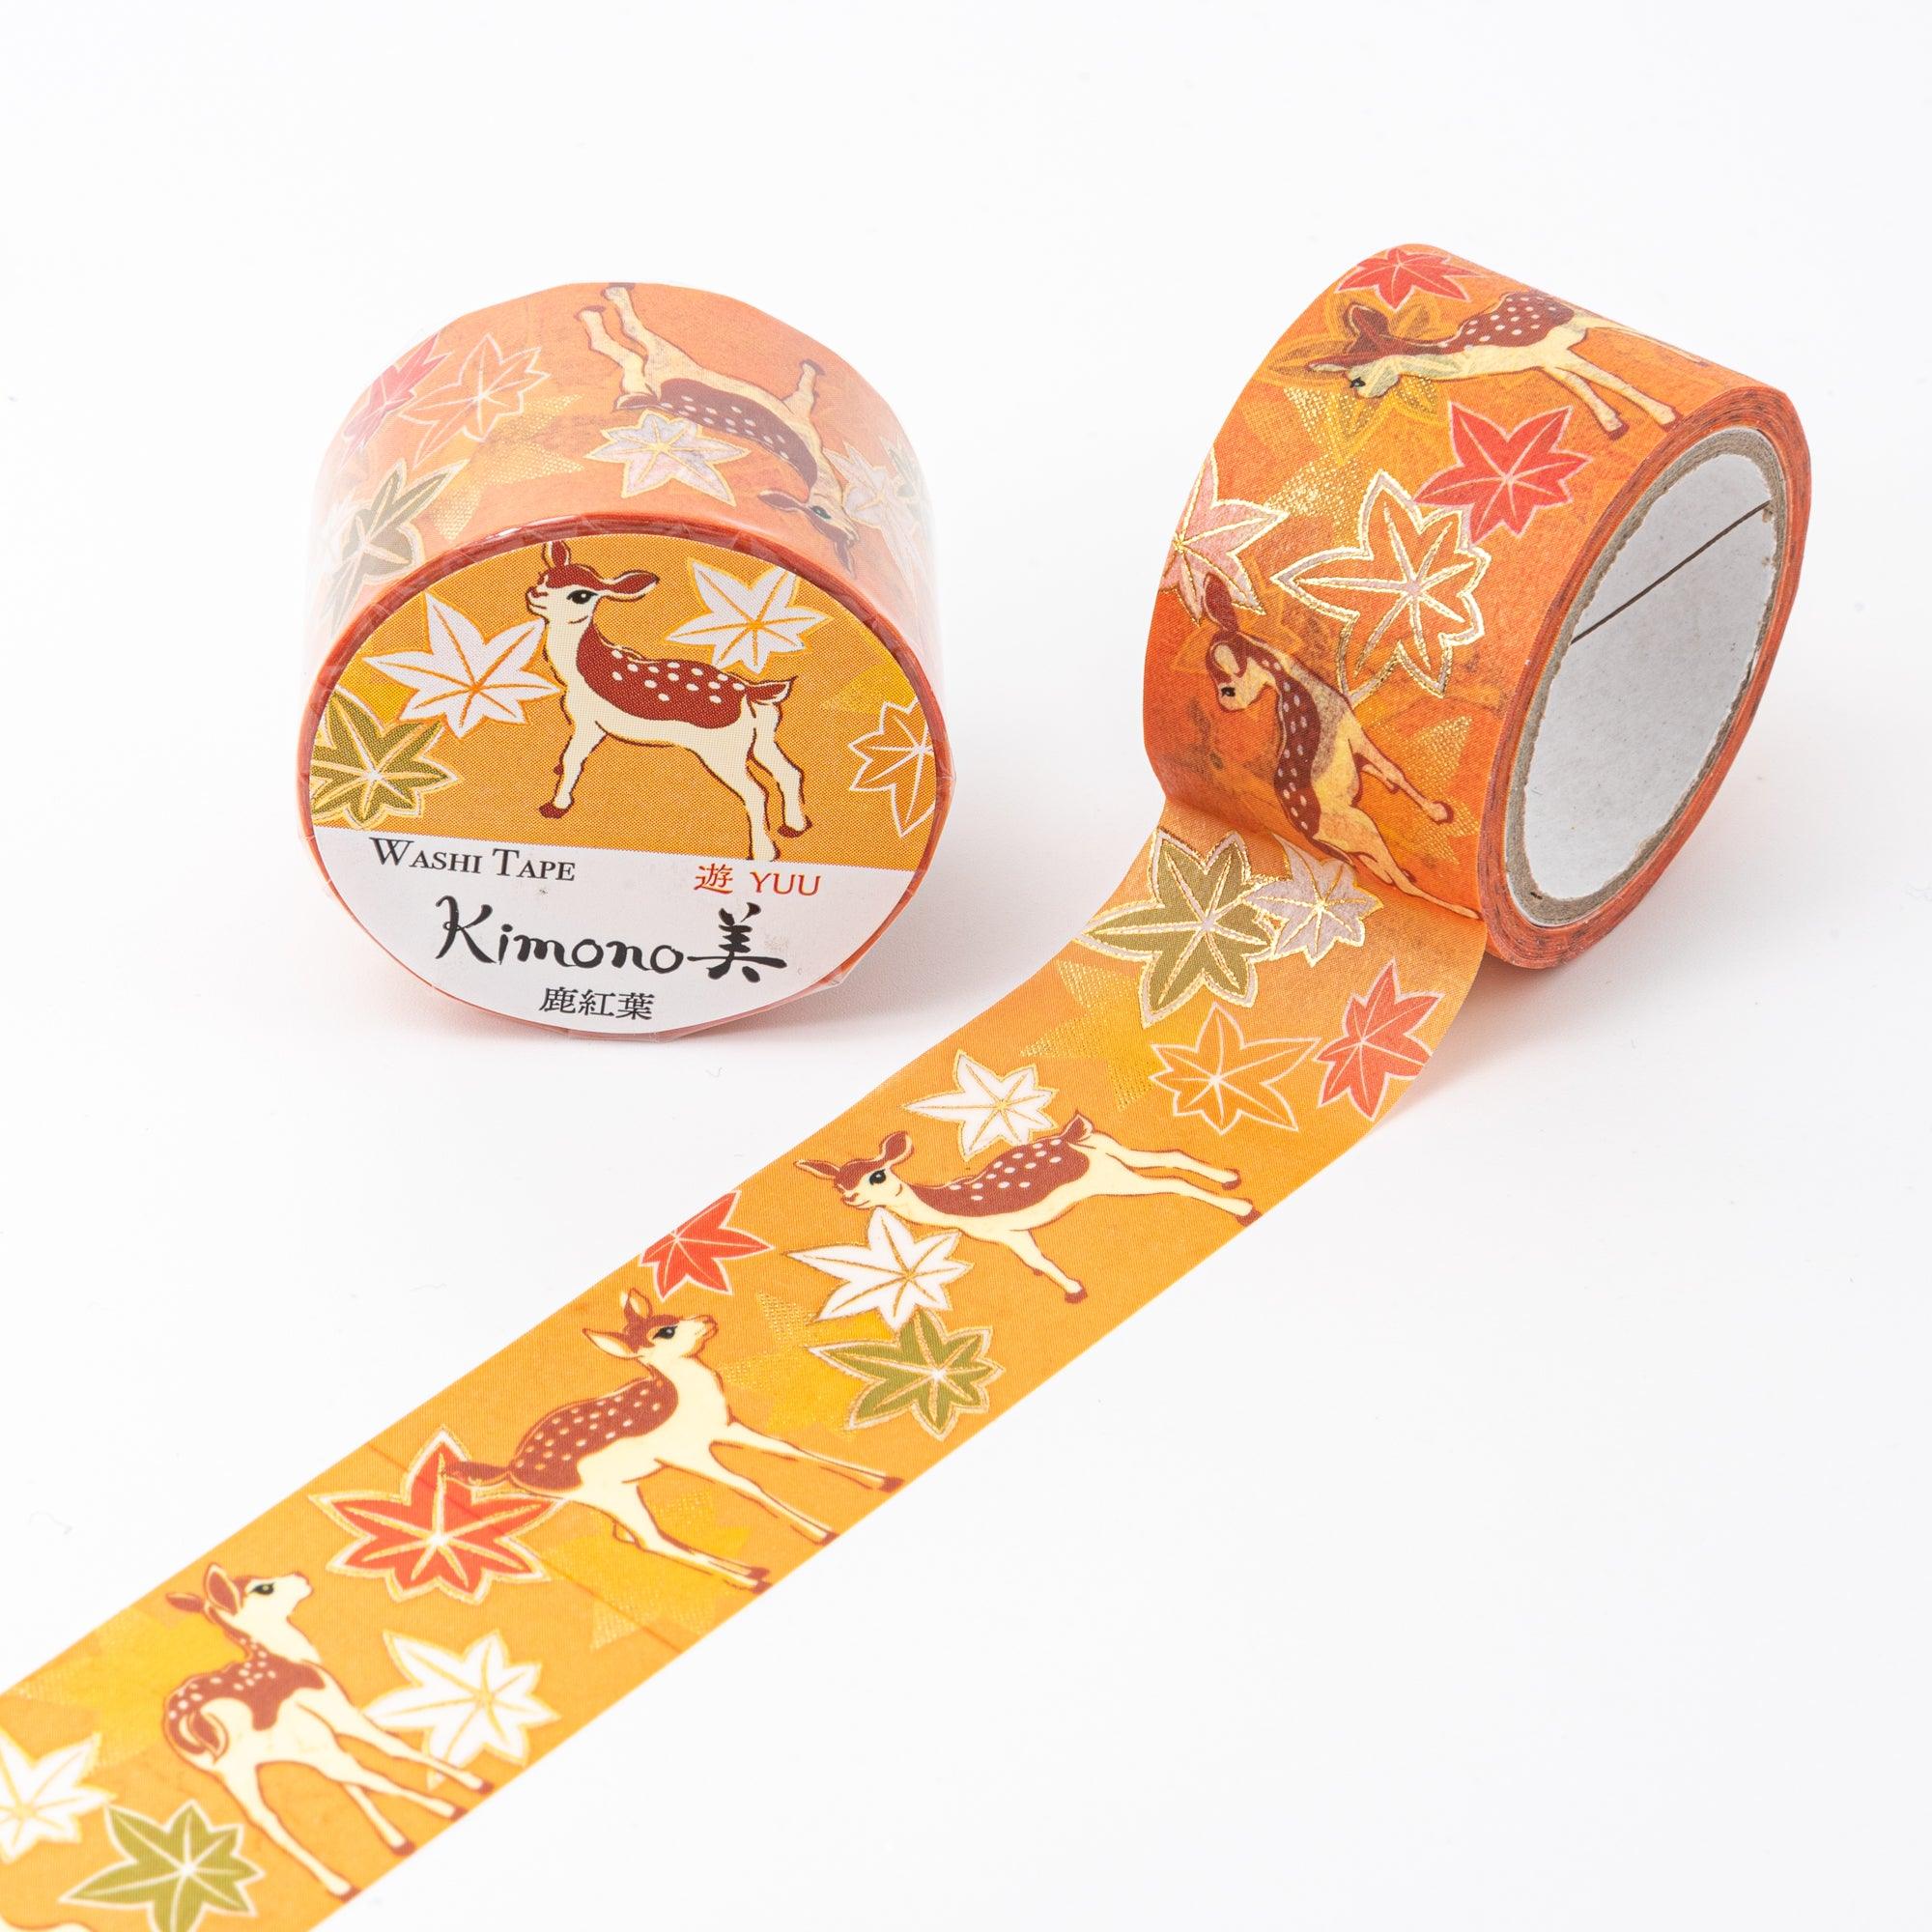 Kimono Beauty Series Deer and Autumn Leaves Iyo Washi Tape - Kamiiso - Komorebi Stationery